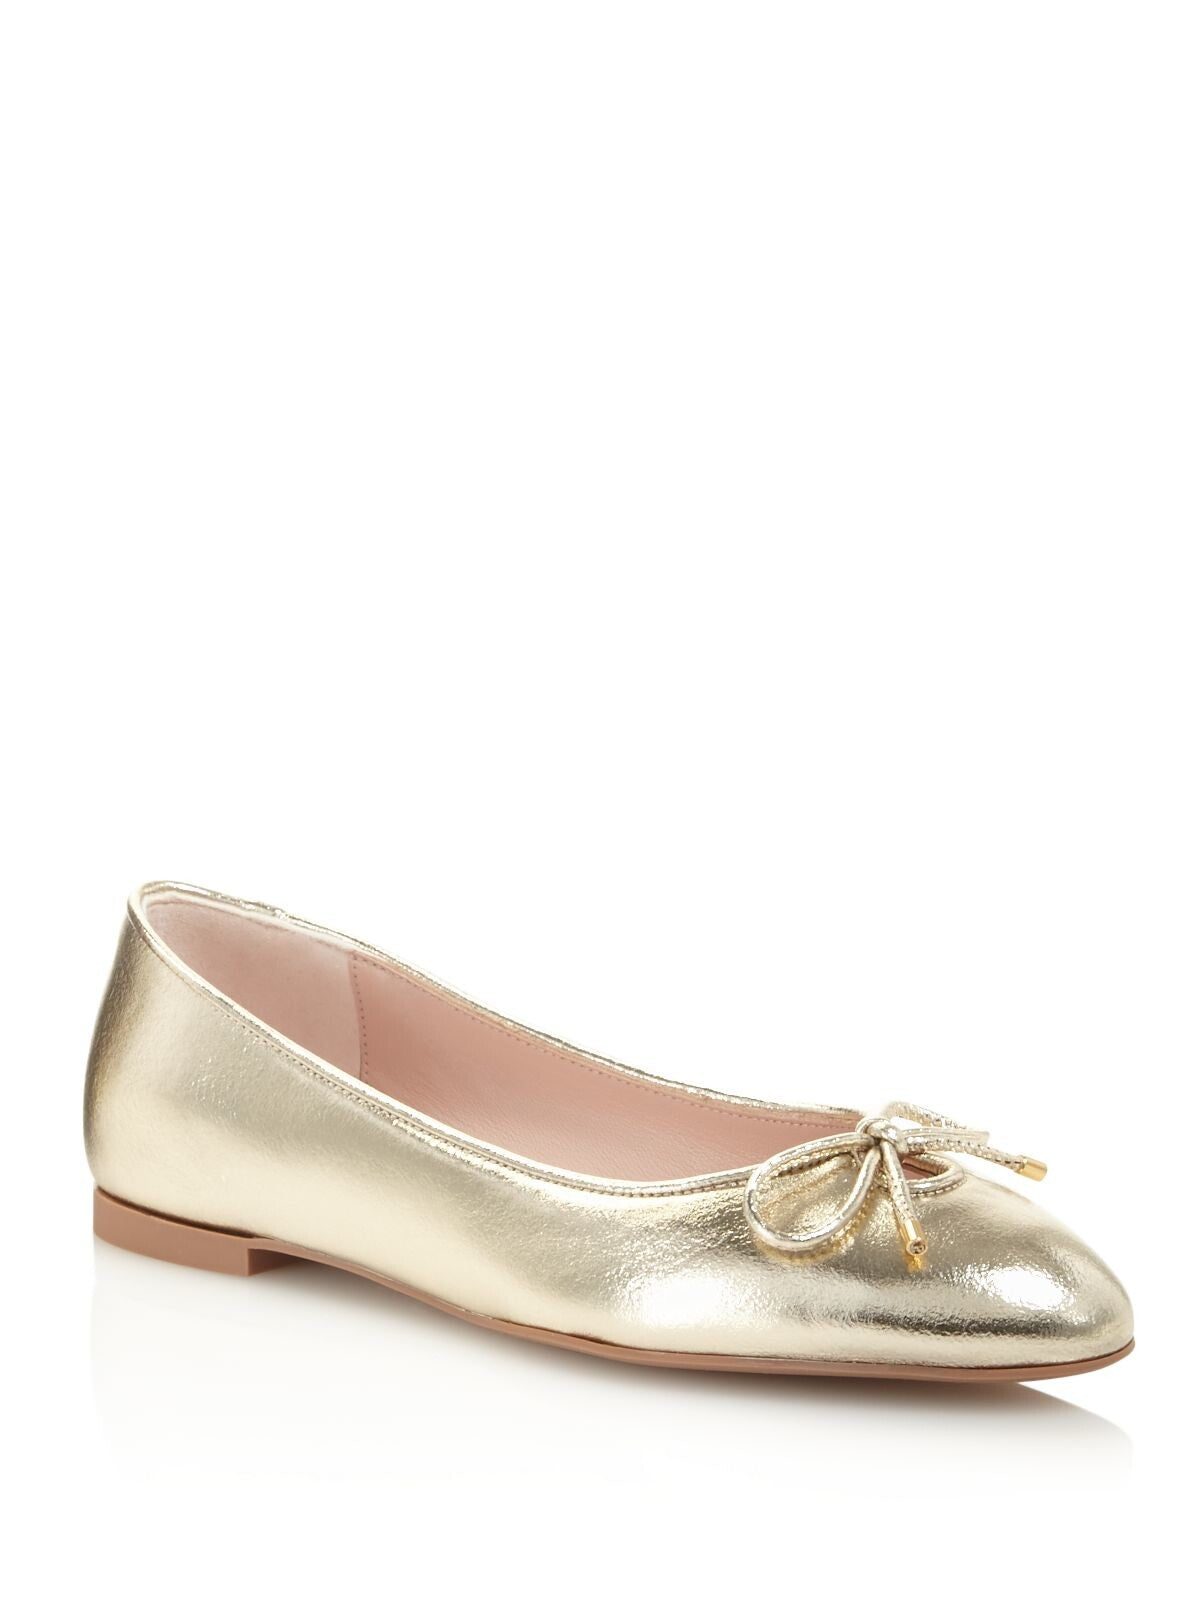 STUART WEITZMAN Womens Gold Metallic Bow Accent Gabby Almond Toe Slip On Leather Dress Ballet Flats 6.5 M